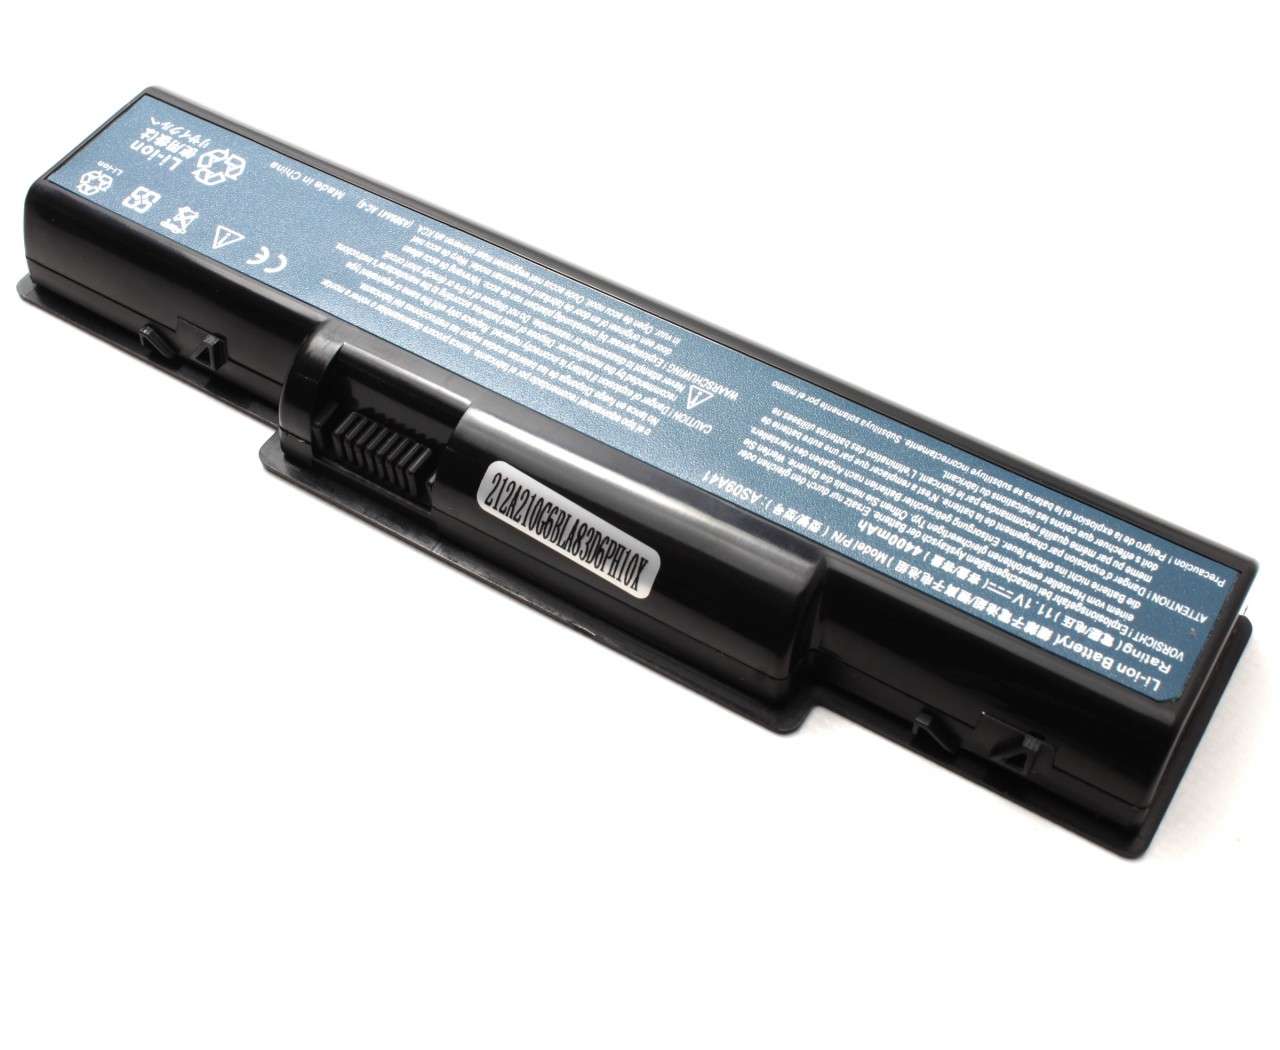 Baterie Acer Aspire 4310 Ver.2